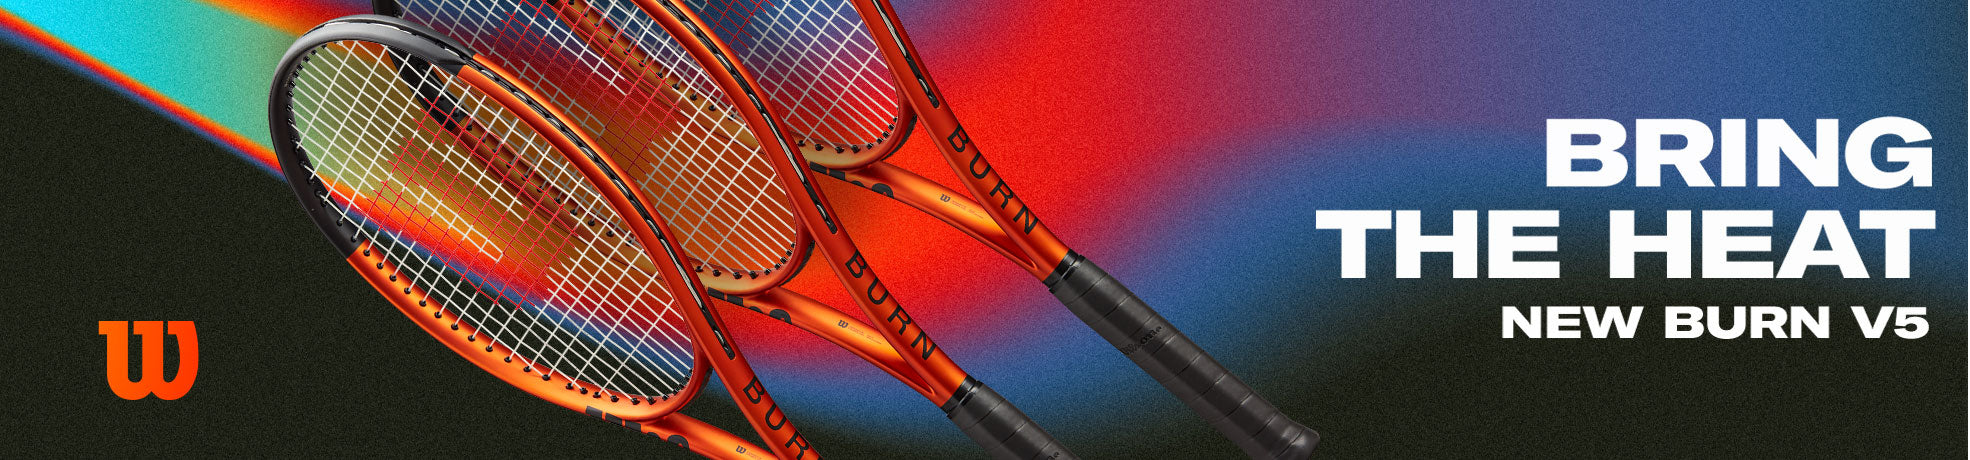 Wilson Ultra v5 Tennis Racquets